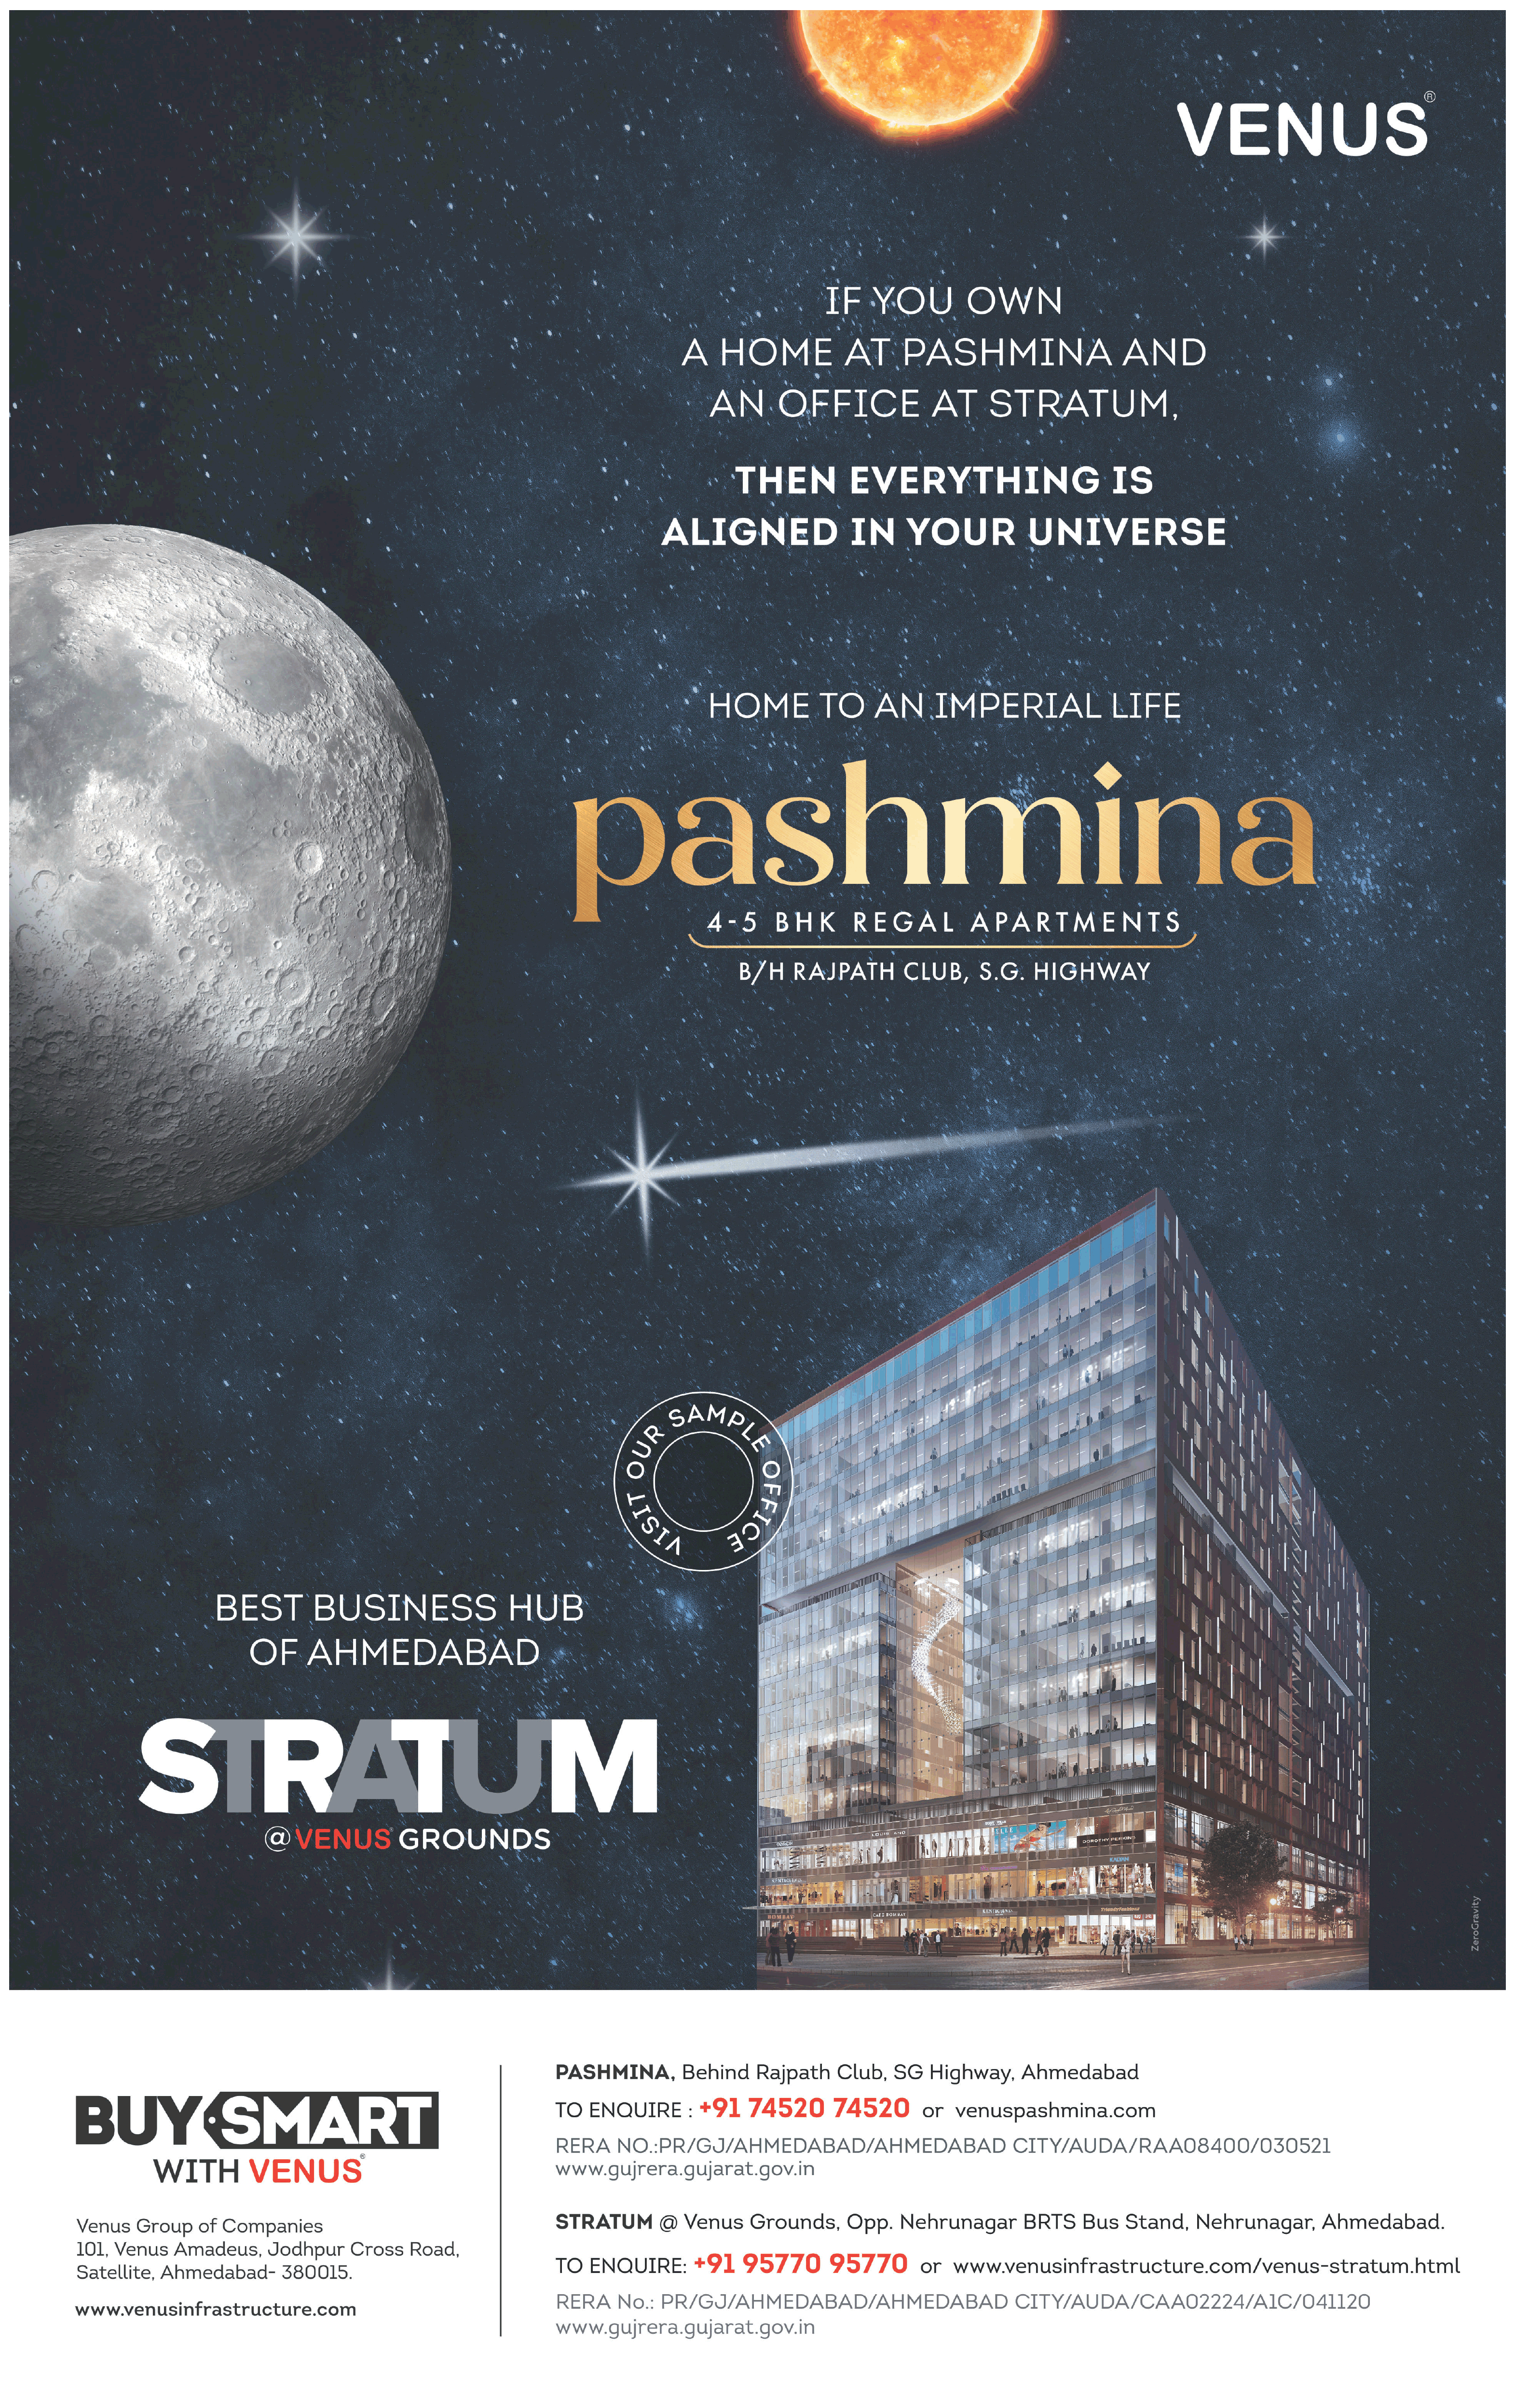 venus-pashmina-stratum-rajpath-club-s-g-highway-ahmedabad-ad-times-of-india-ahmedabad-10-7-2021